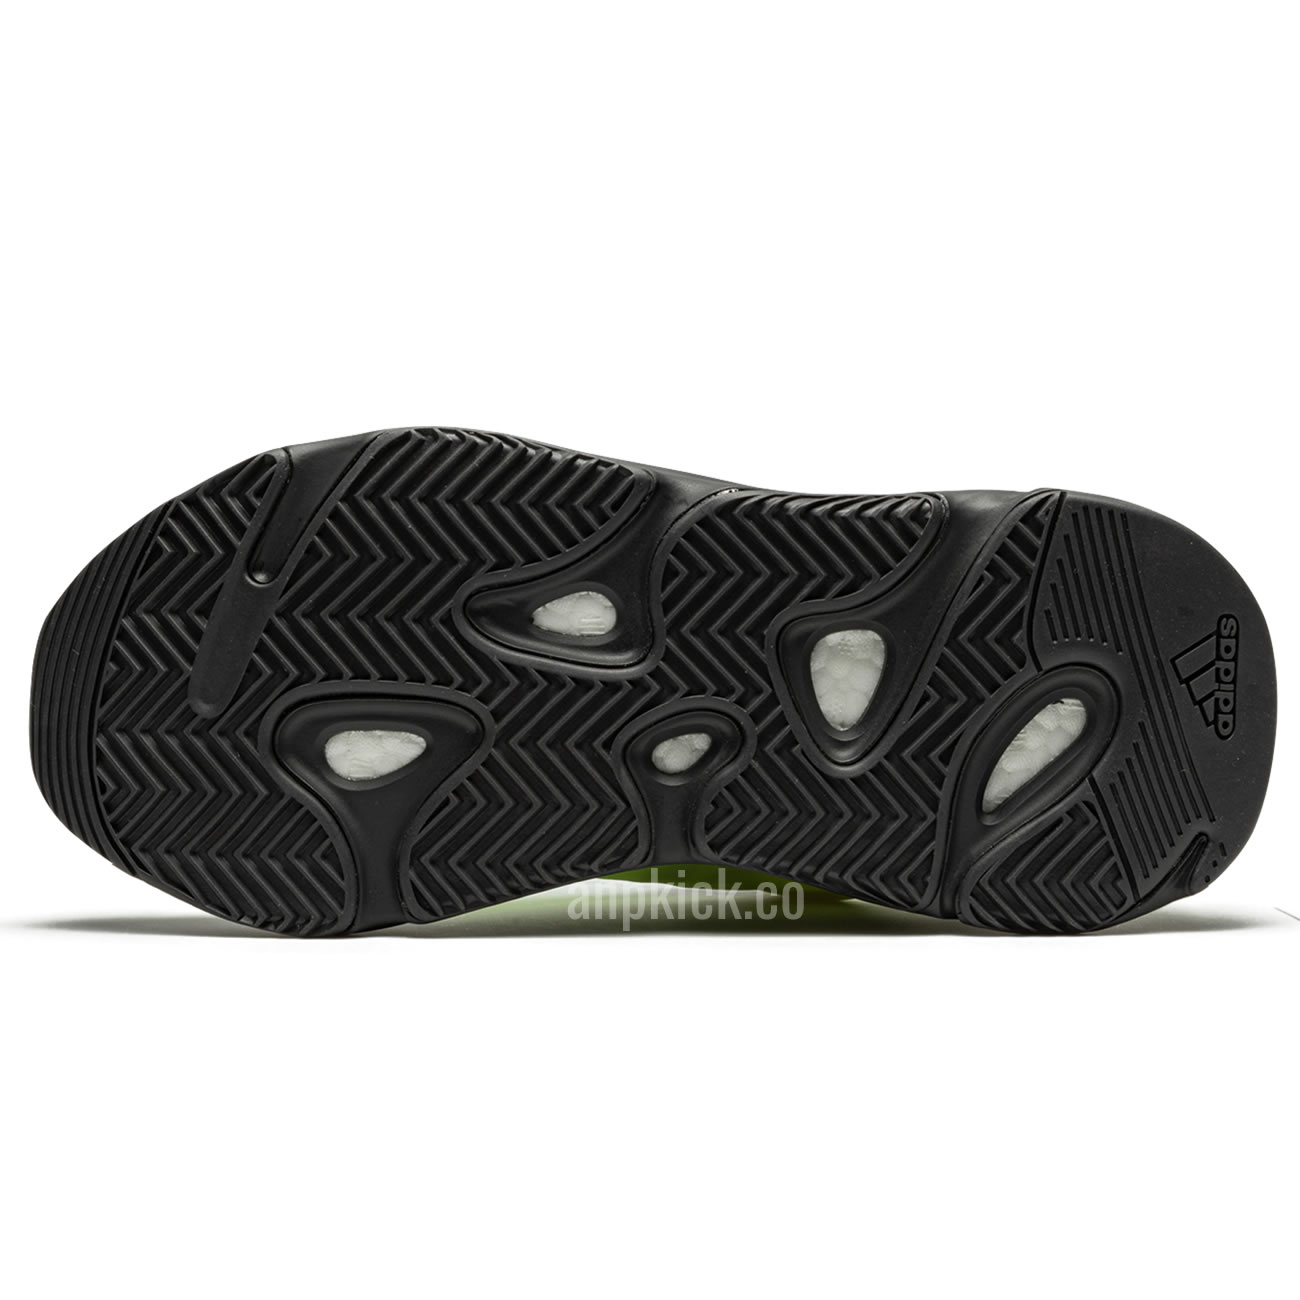 Adidas Yeezy Boost 700 Mnvn Phosphor Fy3727 New Release Date (5) - newkick.org